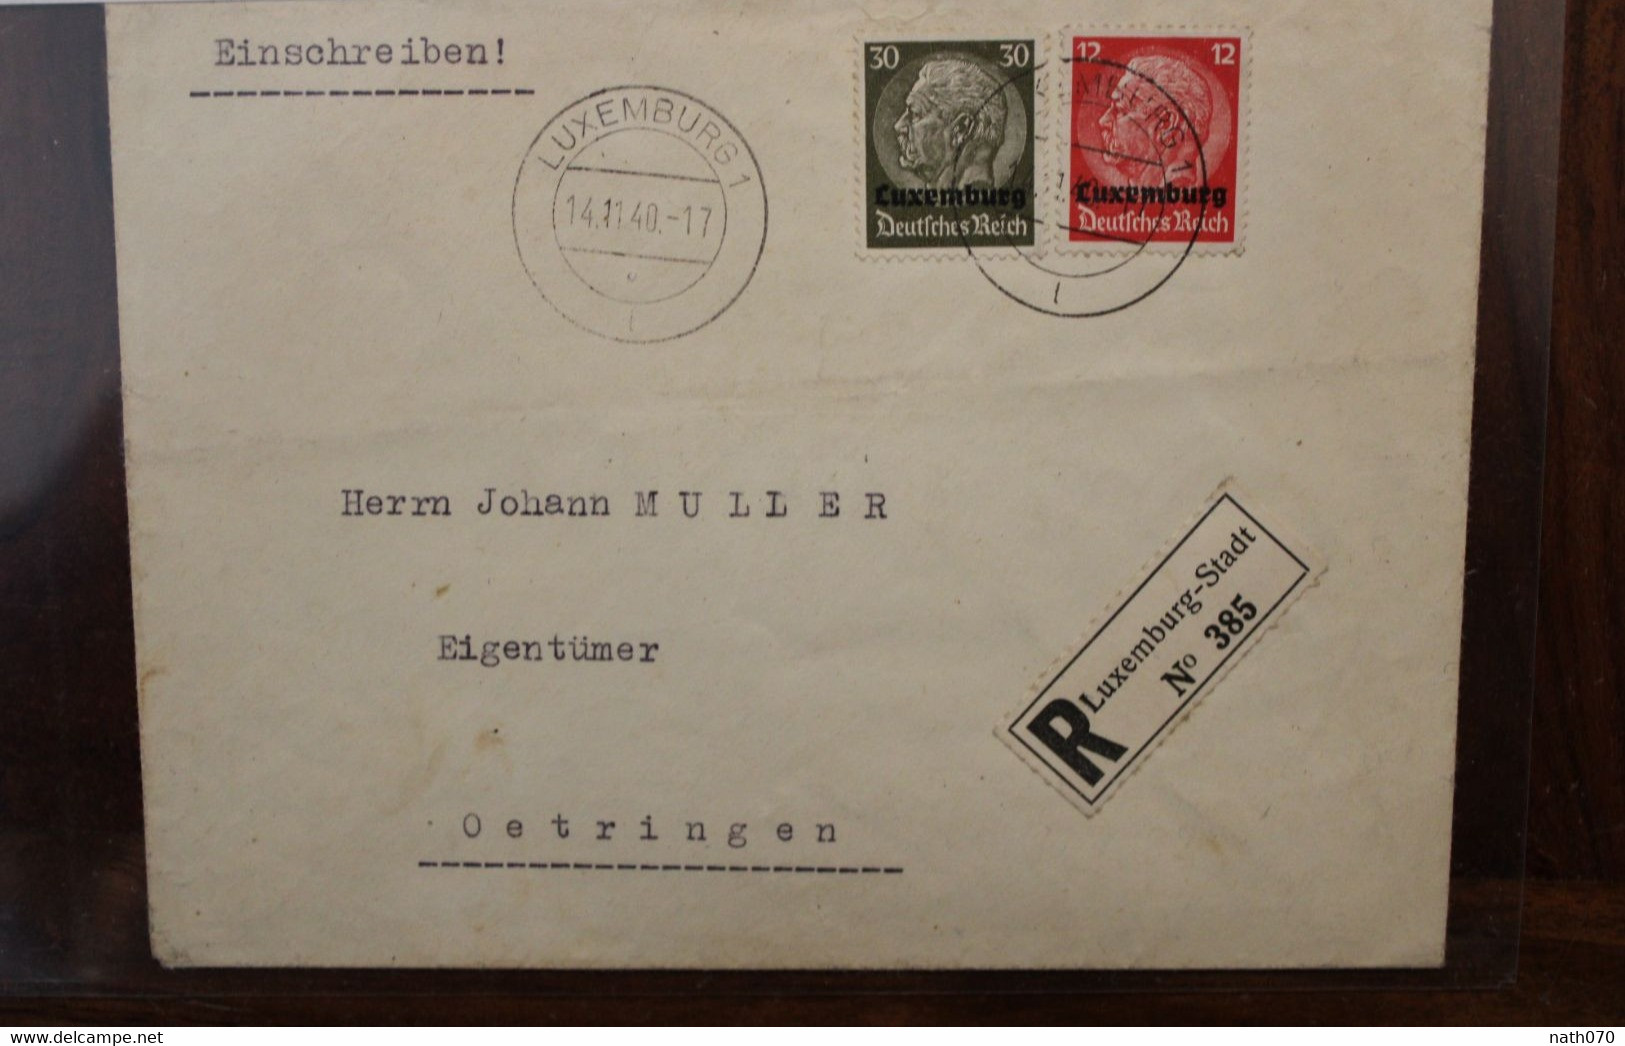 LUXEMBURG 1940 Oetringen Einschreiben Cover Luxembourg Registered Recommandé Besetzung Occupation - Occupation 1938-45